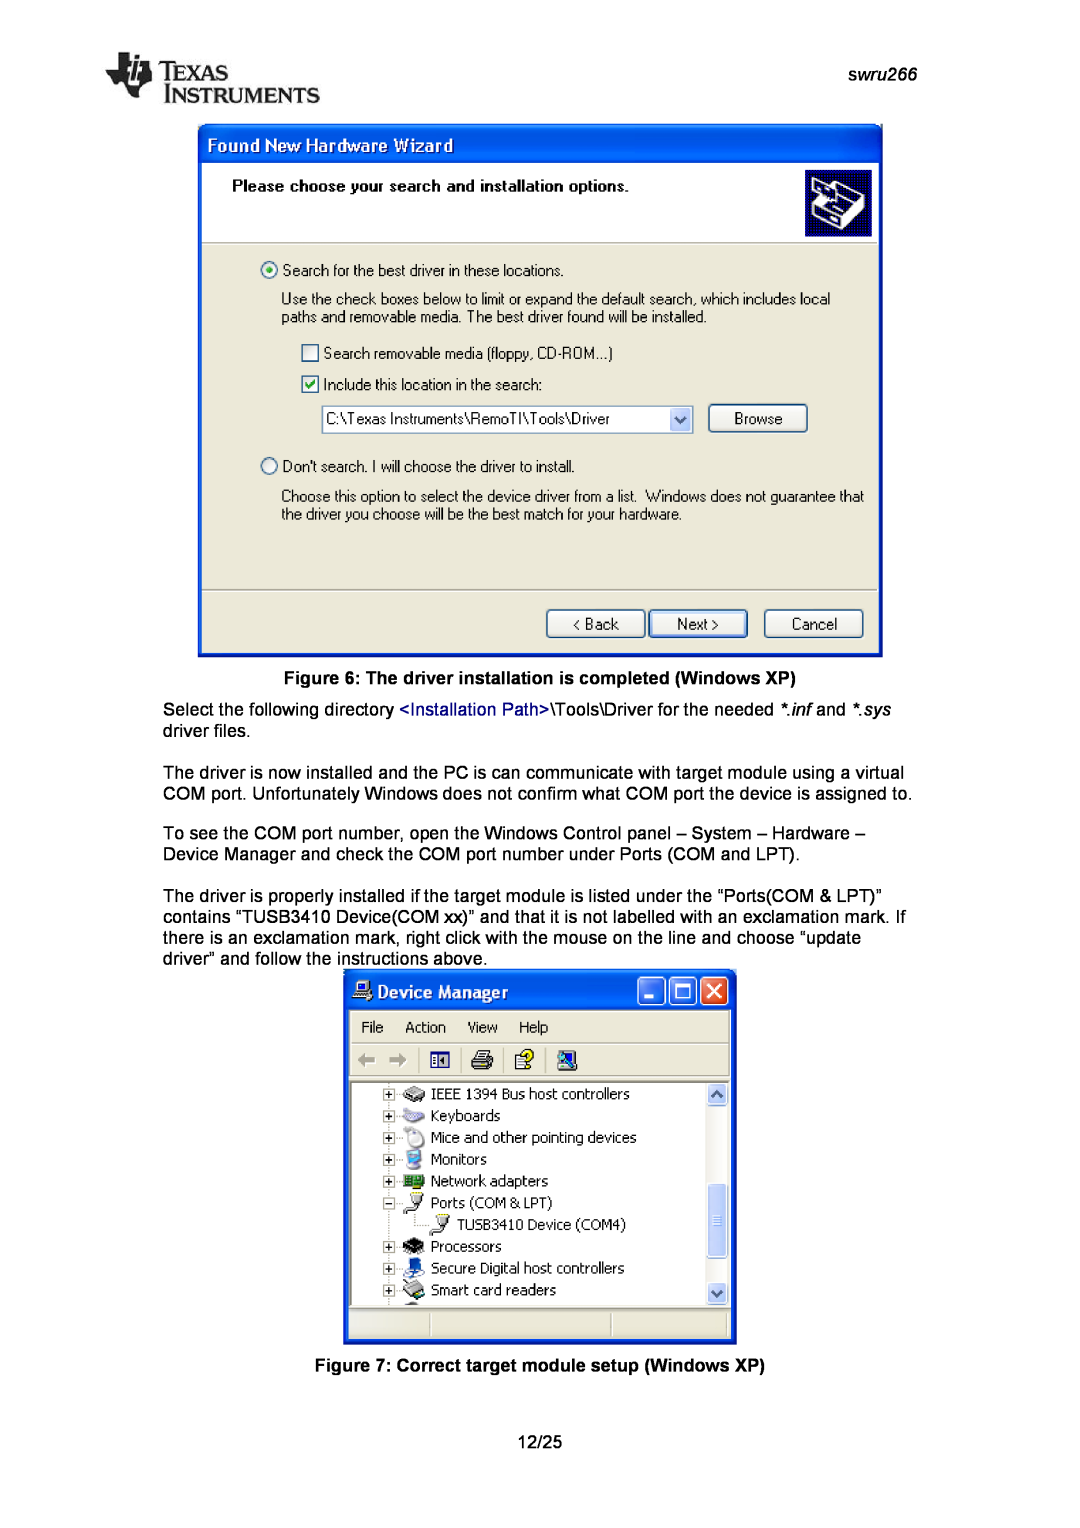 Texas Instruments CC2533 manual Correct target module setup Windows XP, swru266 